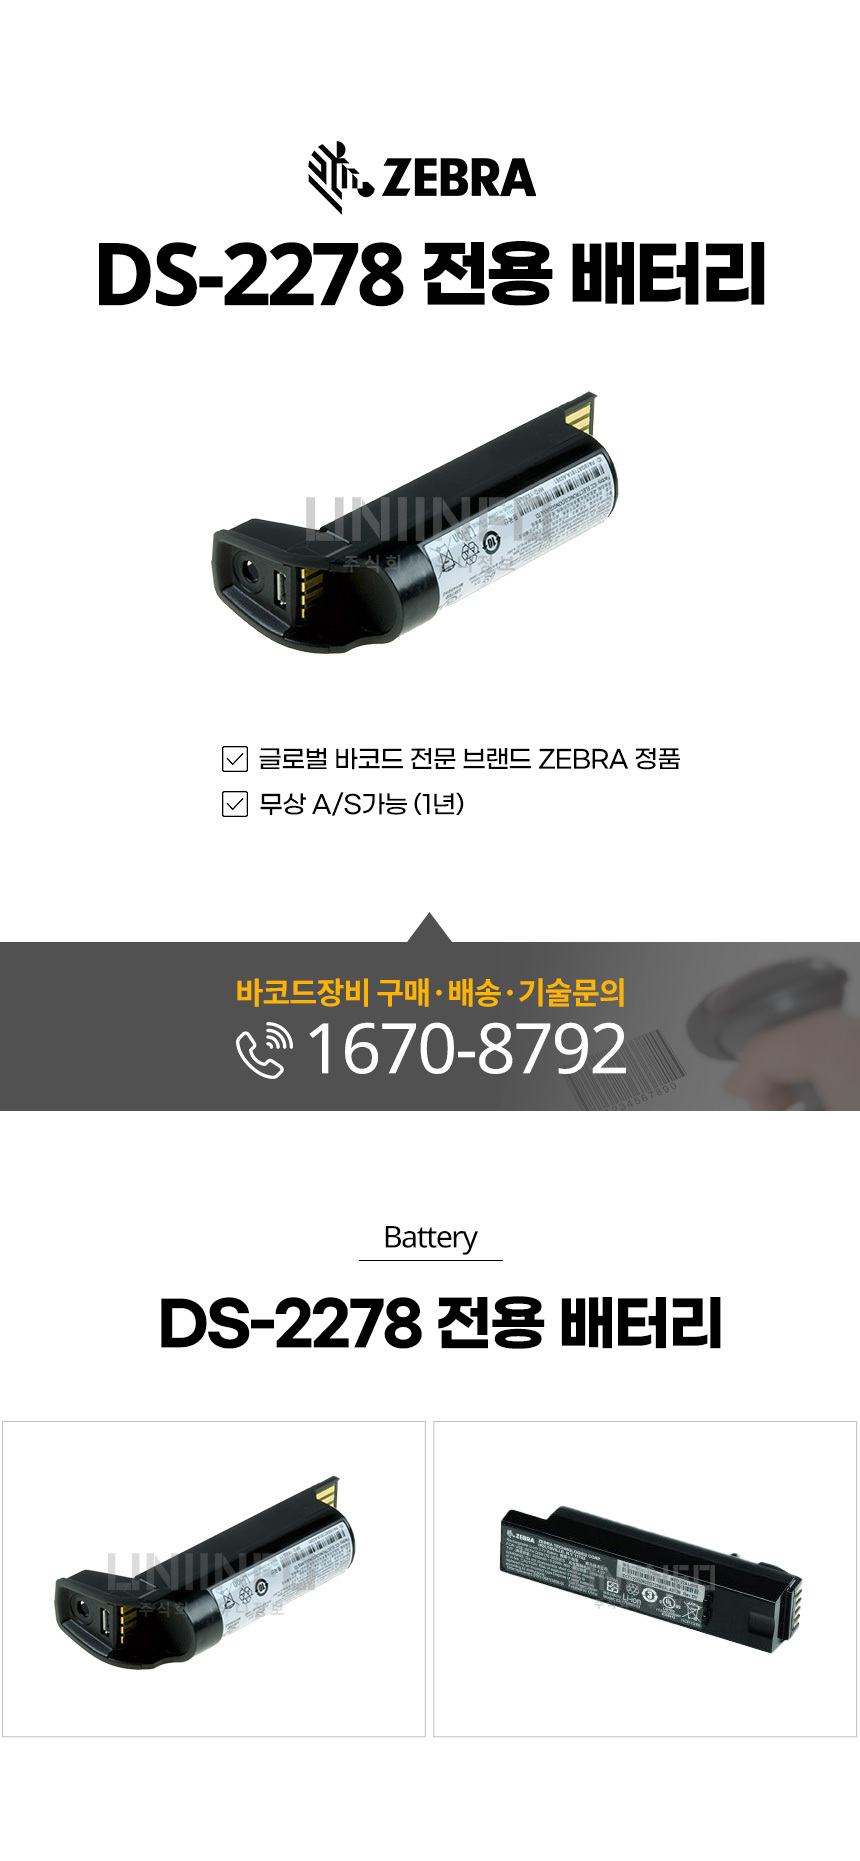 zebra 지브라 ds-2278 전용 배터리 글로벌 바코드 전문 브랜드 제브라 정품 무상 as 가능 1년